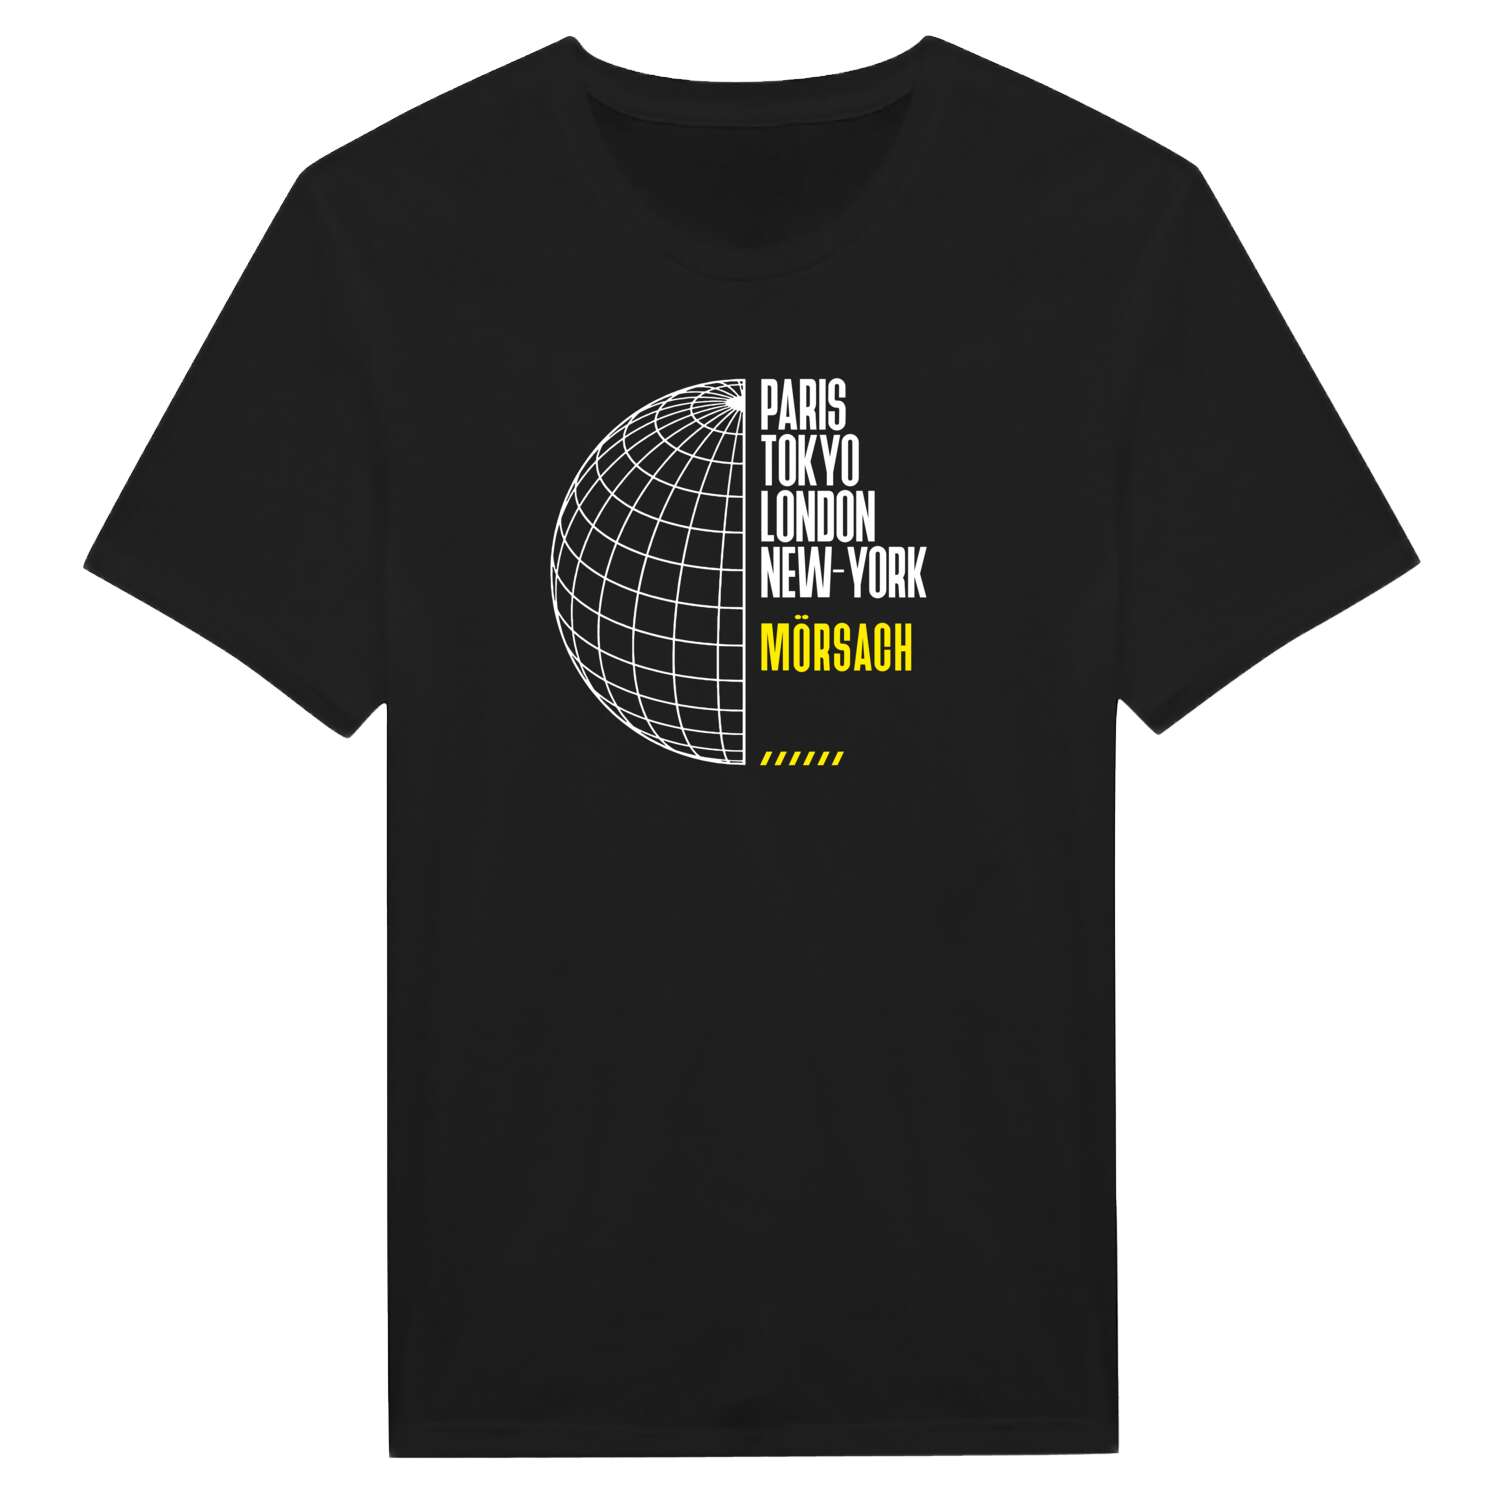 Mörsach T-Shirt »Paris Tokyo London«